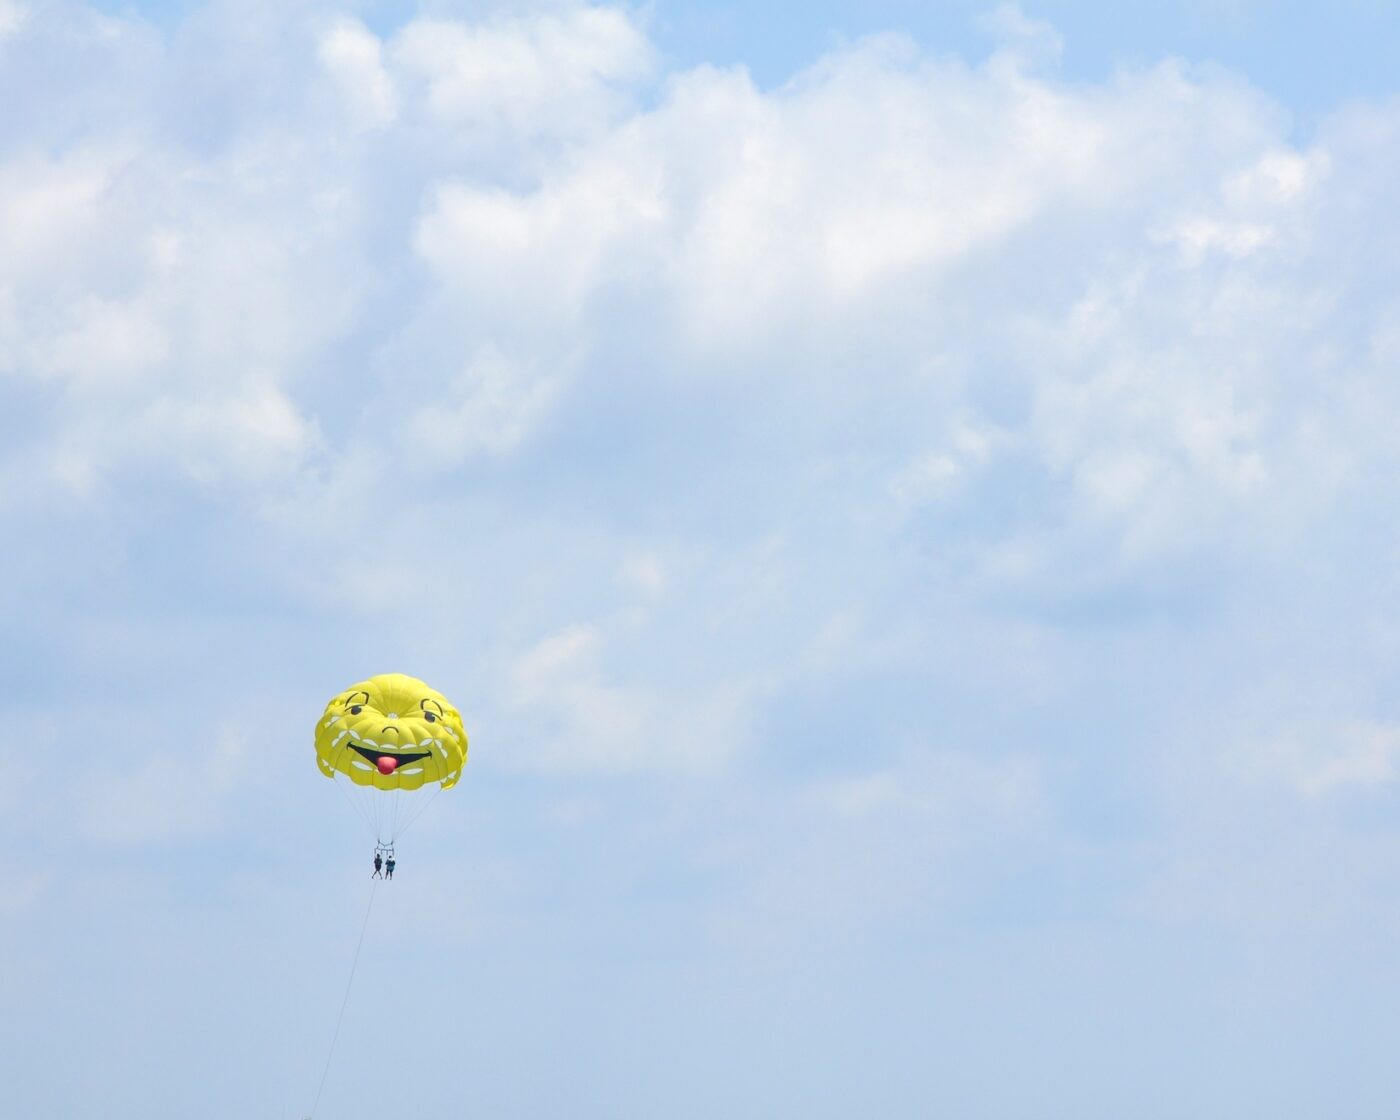 Fun water sport mediterranean sea smiley face emoji parachute flying in the sky t20 9l KQGA